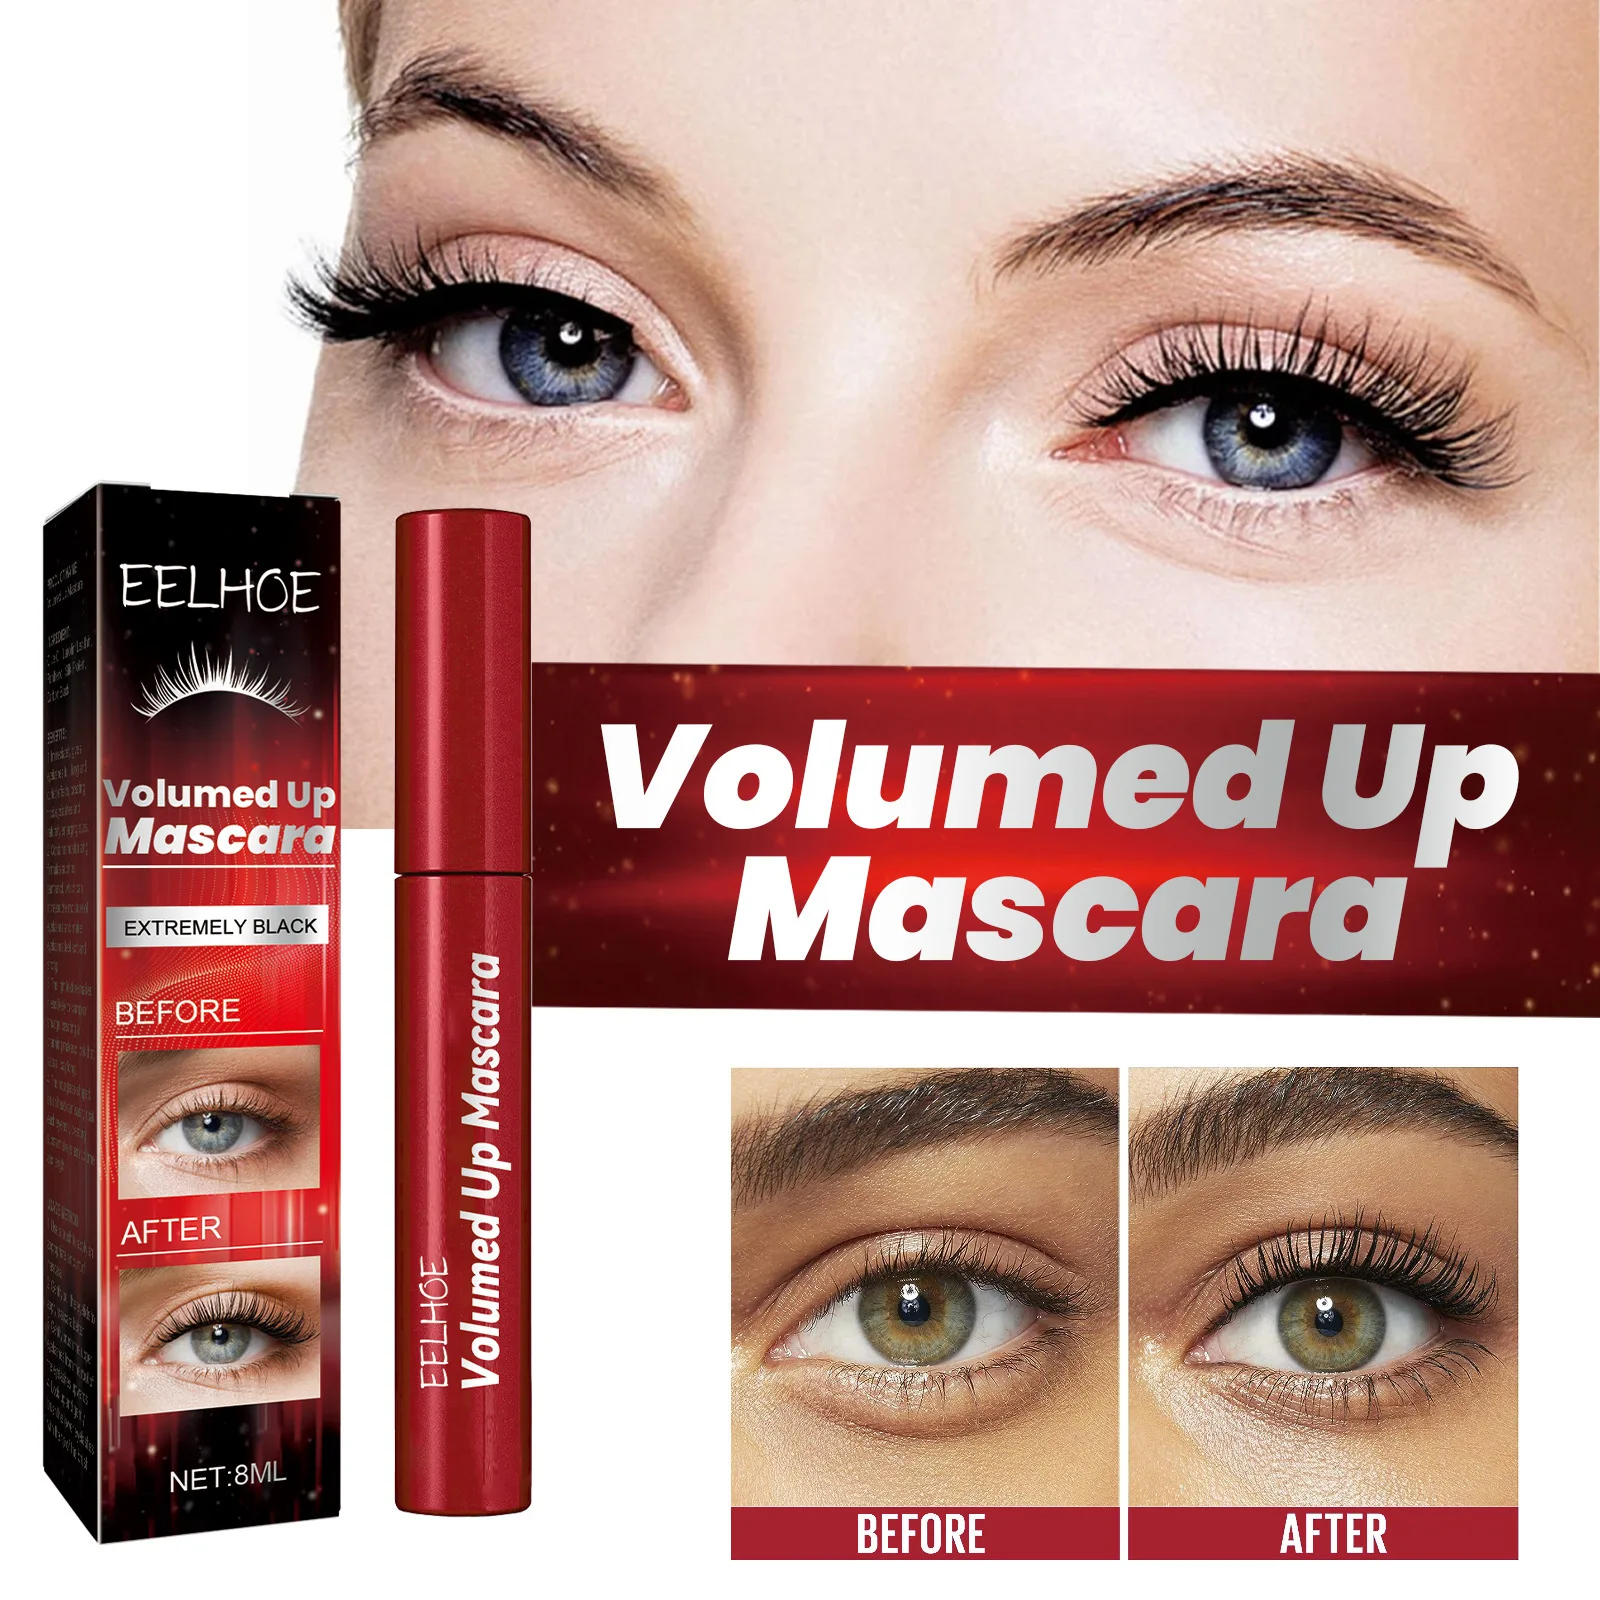 

Eelhoe Mascara Moisturizing Eyelashes Long Curling Black Beautiful Natural Makeup Not Smudge Mascara Waterproof Eye Makeup